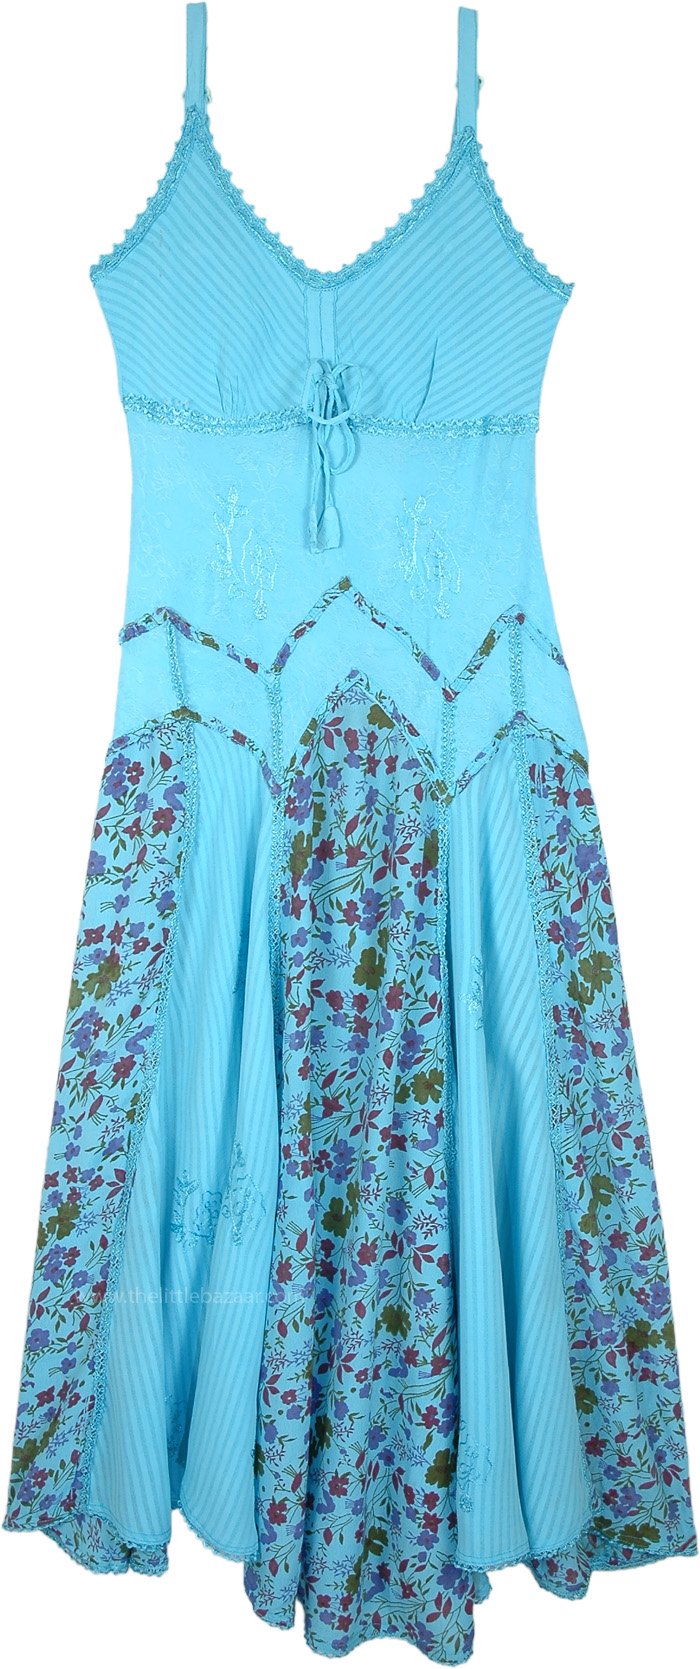 Aqua Blue Western Dress with Vertical Floral Panels